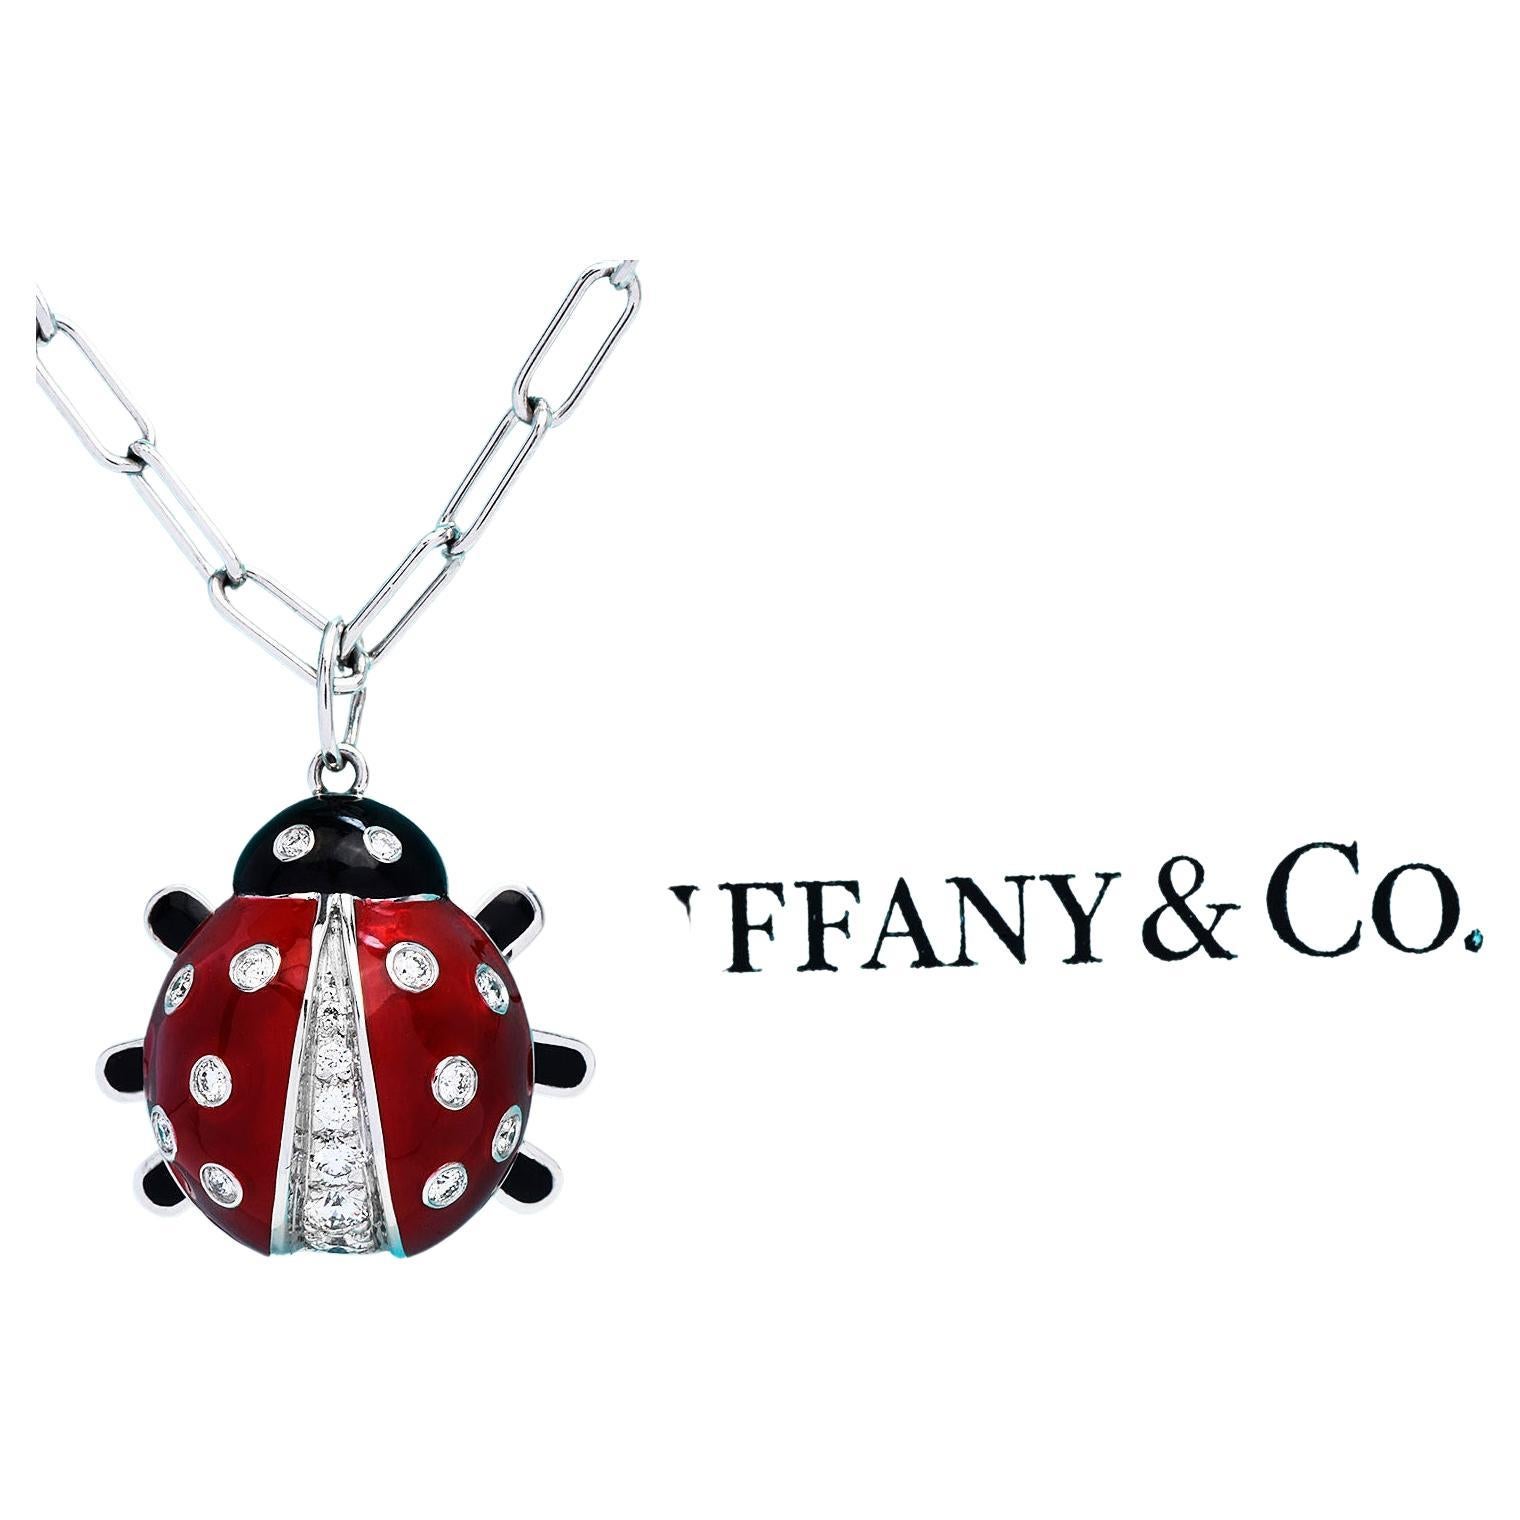 Tiffany & Co. Luck Necklaces | Mercari